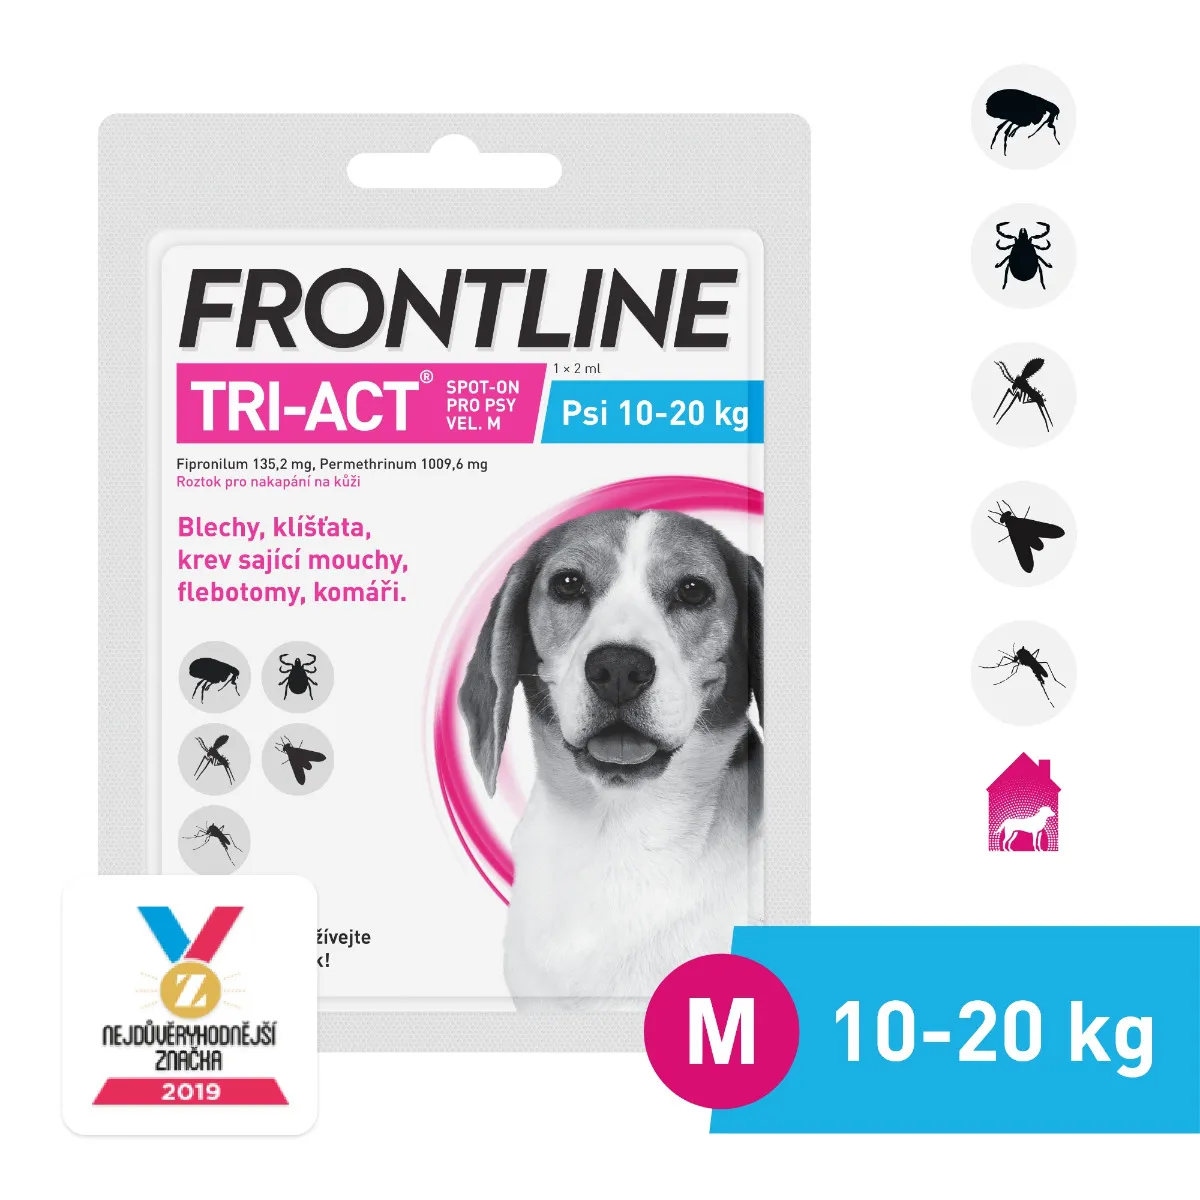 FRONTLINE TRI-ACT pro psy 10-20 kg (M) 1 pipeta